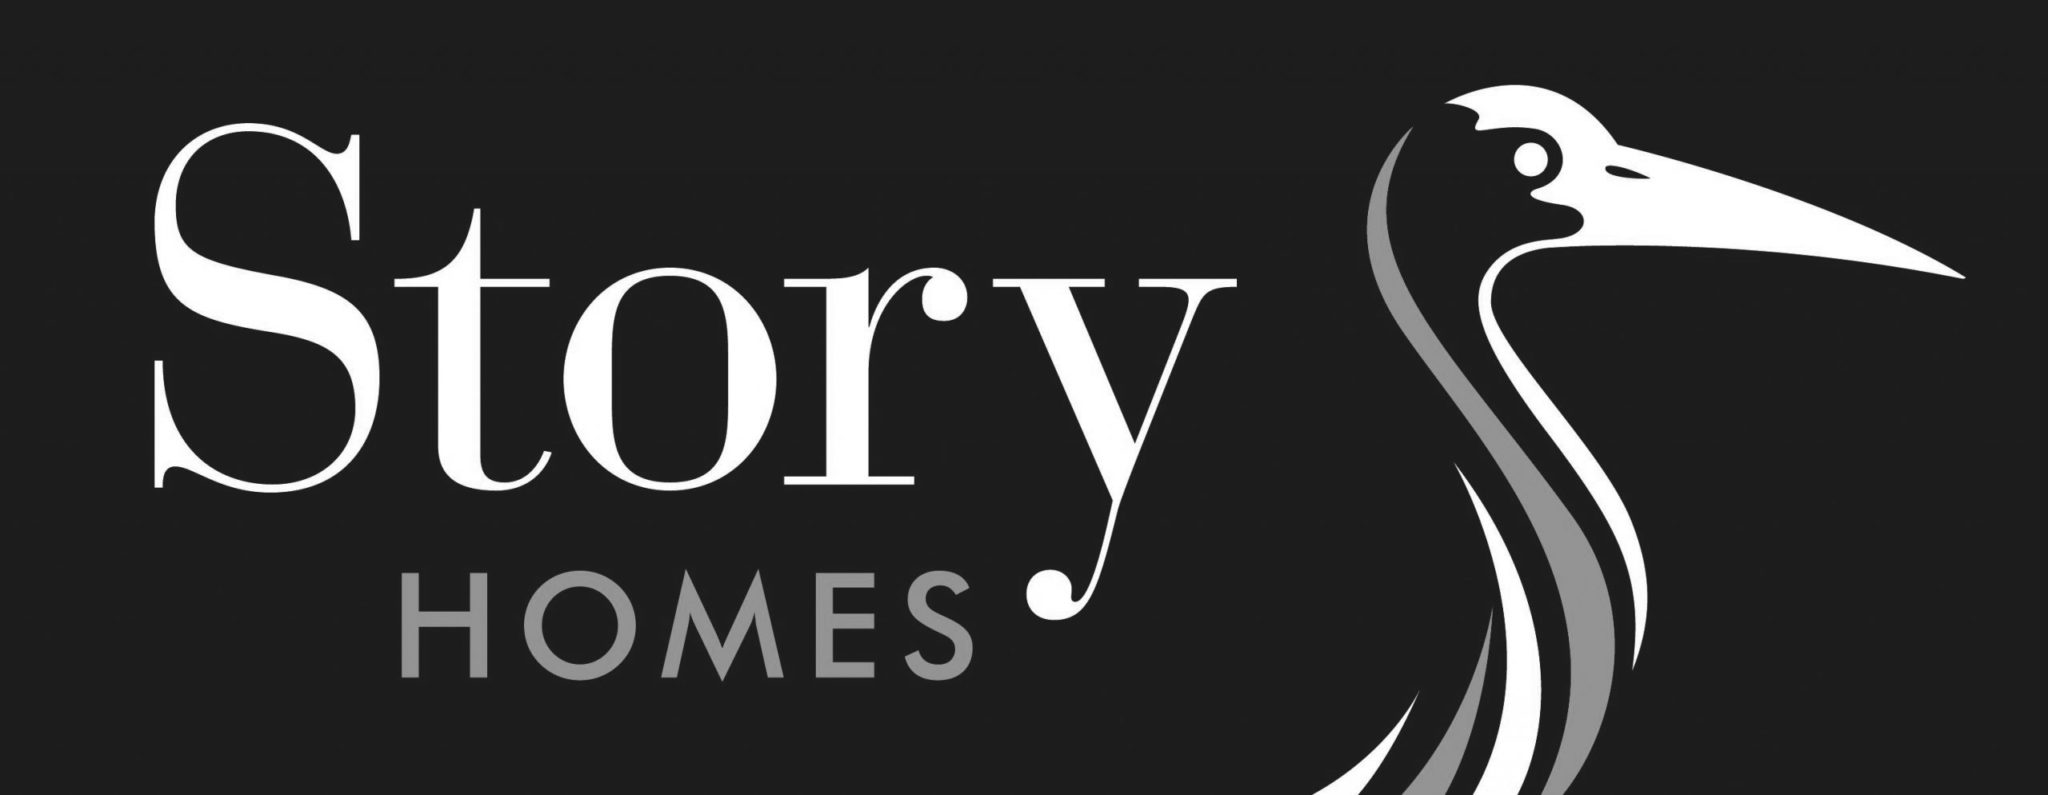 Story_Homes_Logo_RGB-BW-1-scaled.jpg